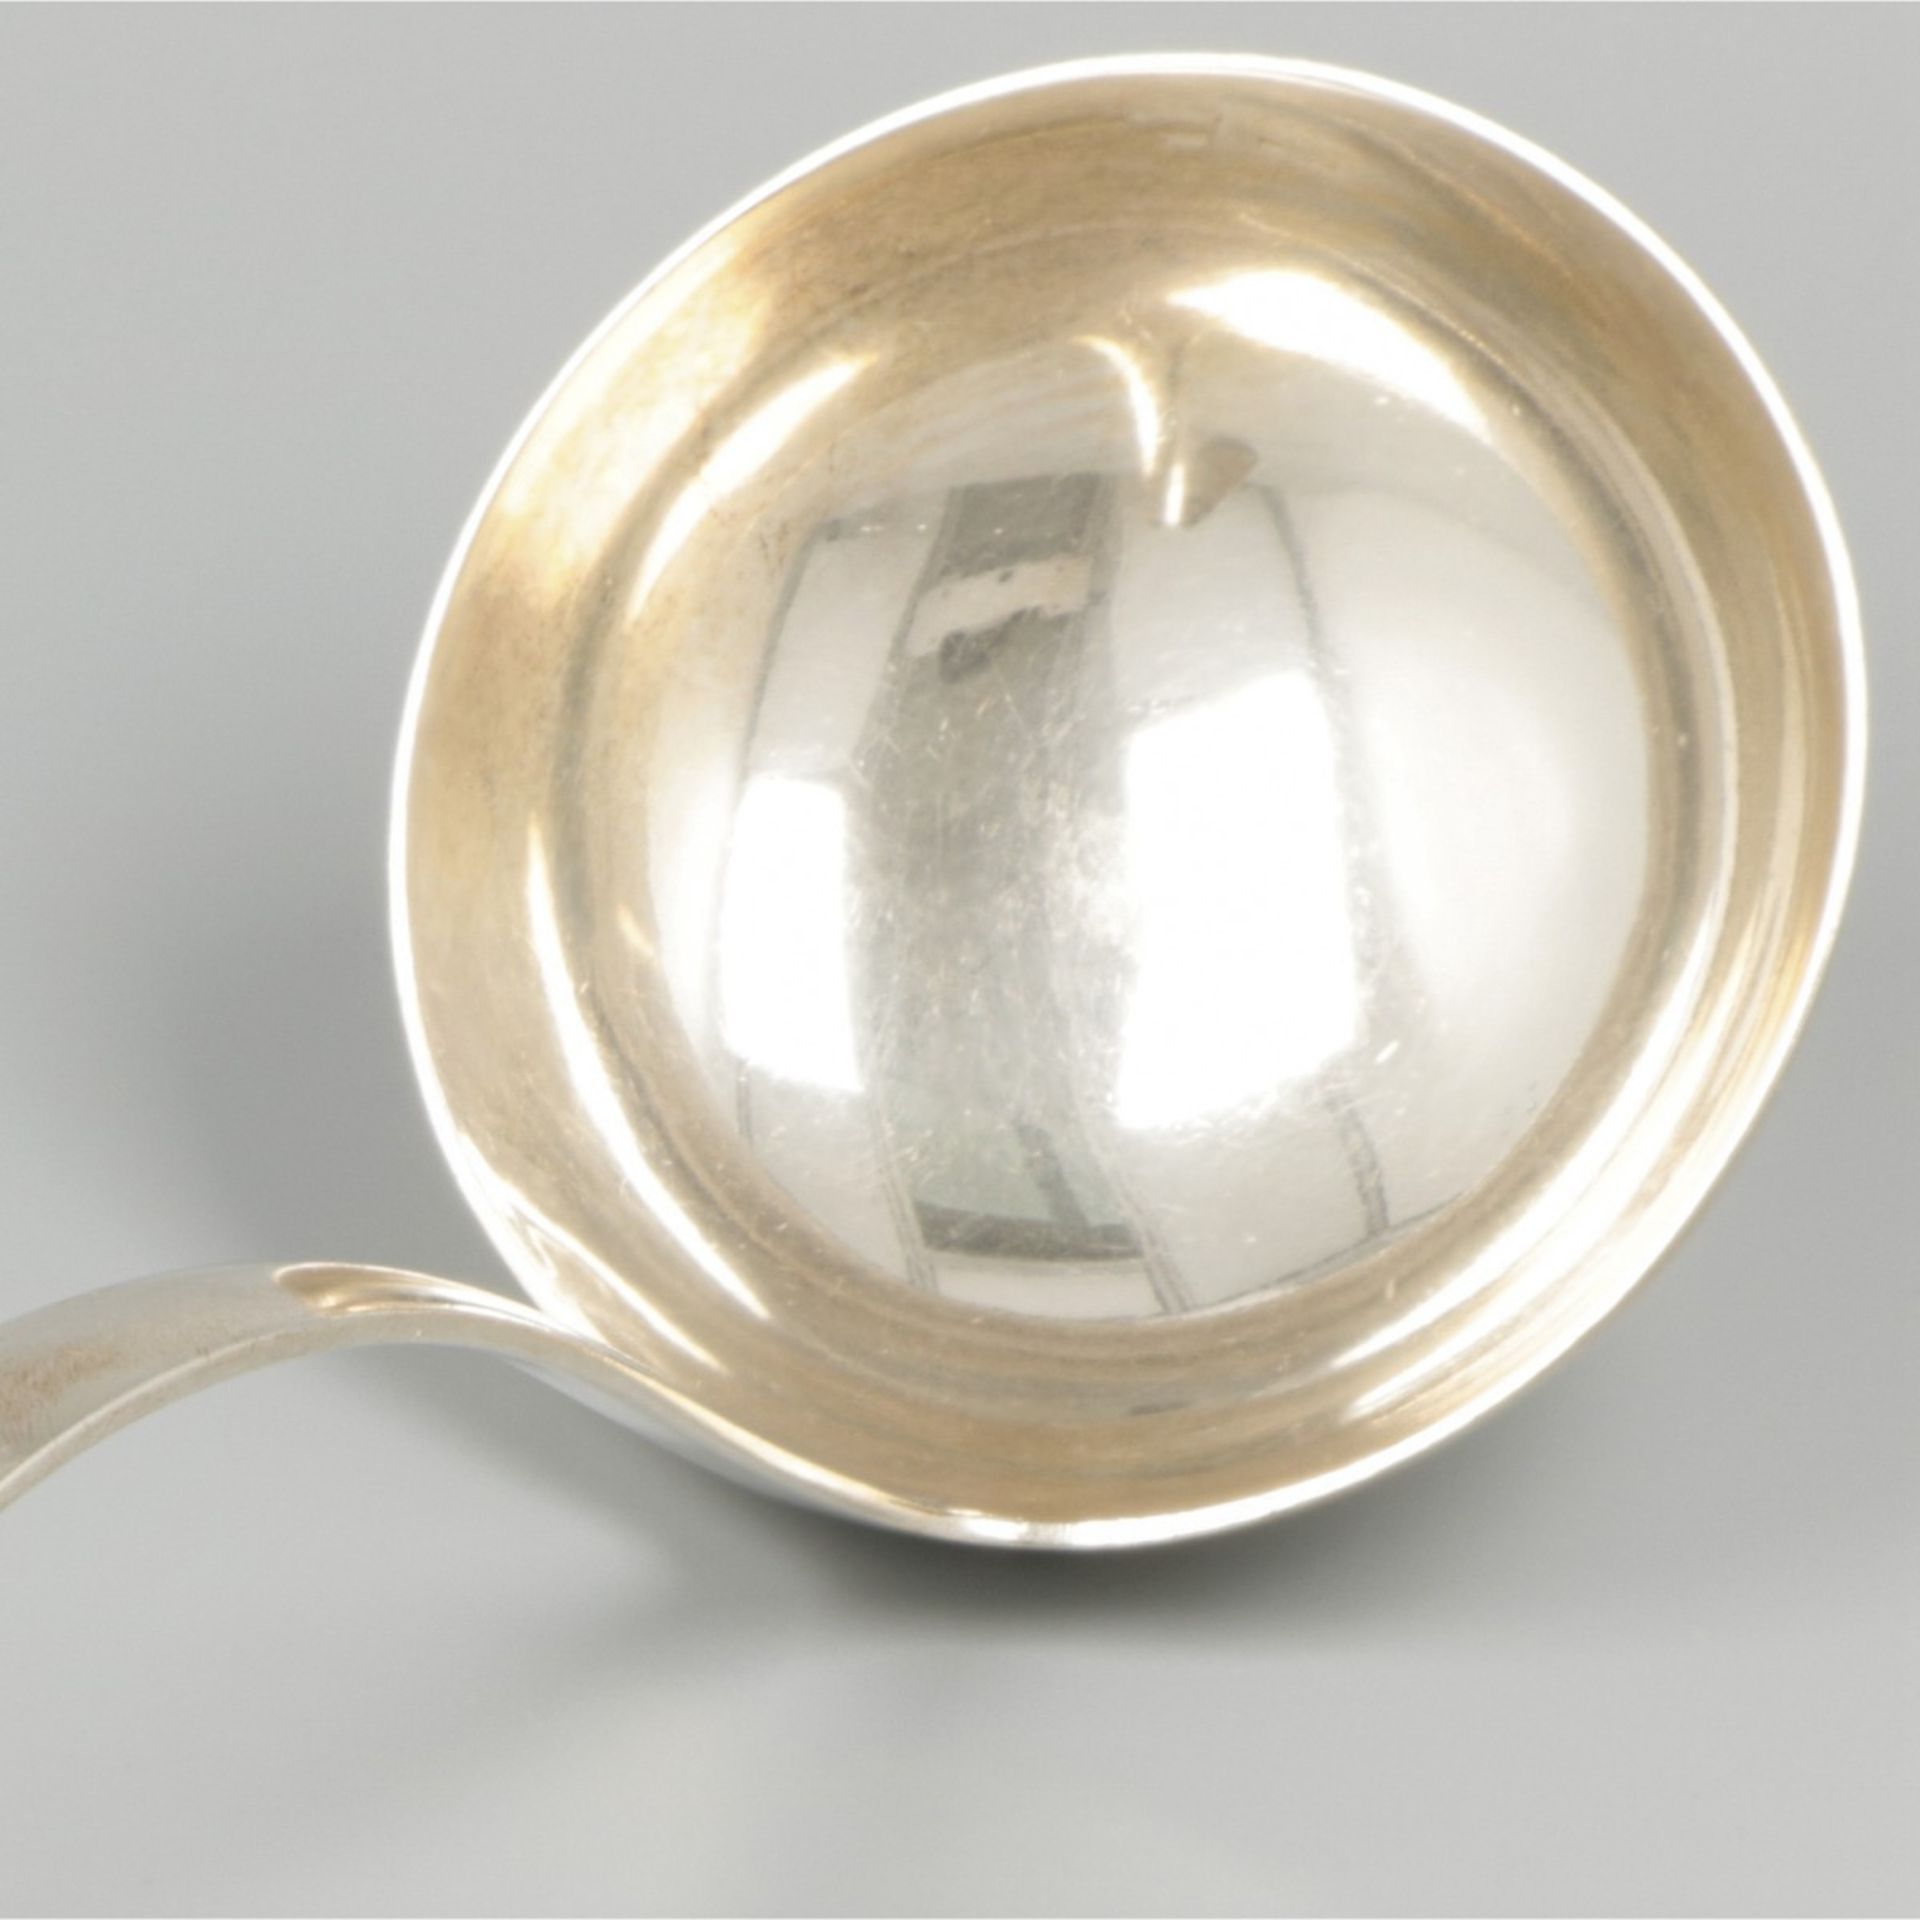 Soeplouche / Soup spoon ''Haags Lofje" silver. - Image 2 of 5